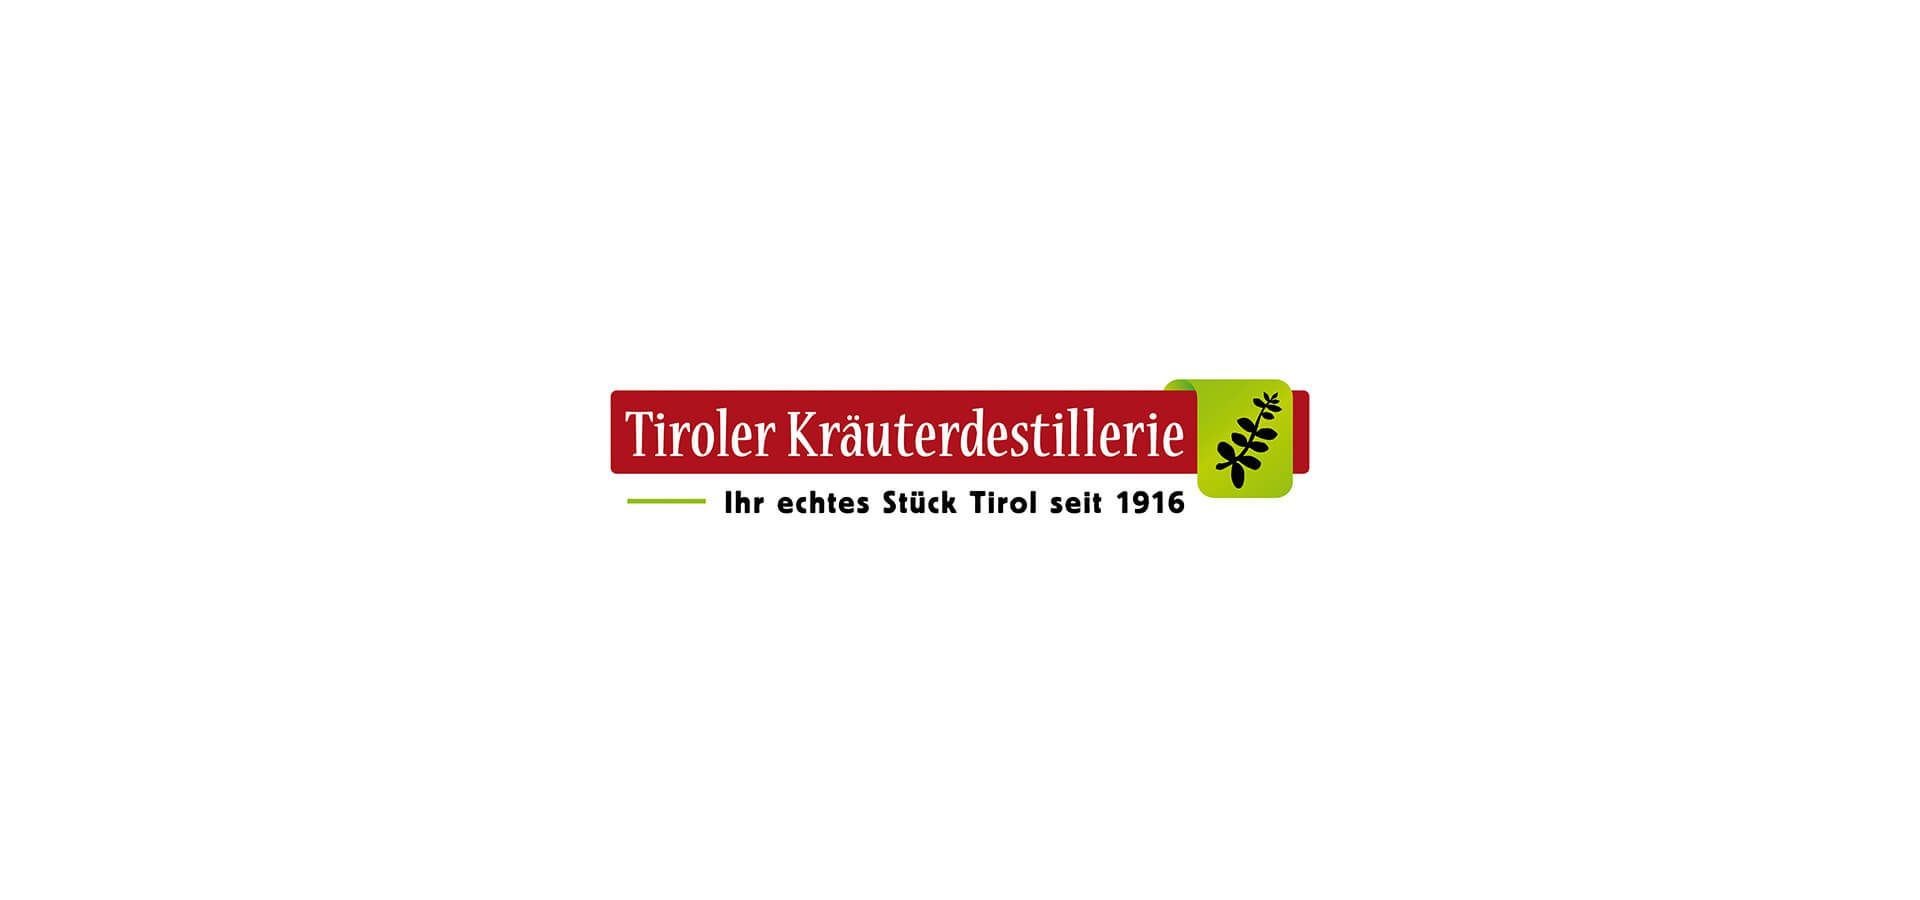 Tiroler Kräuterdestillerie